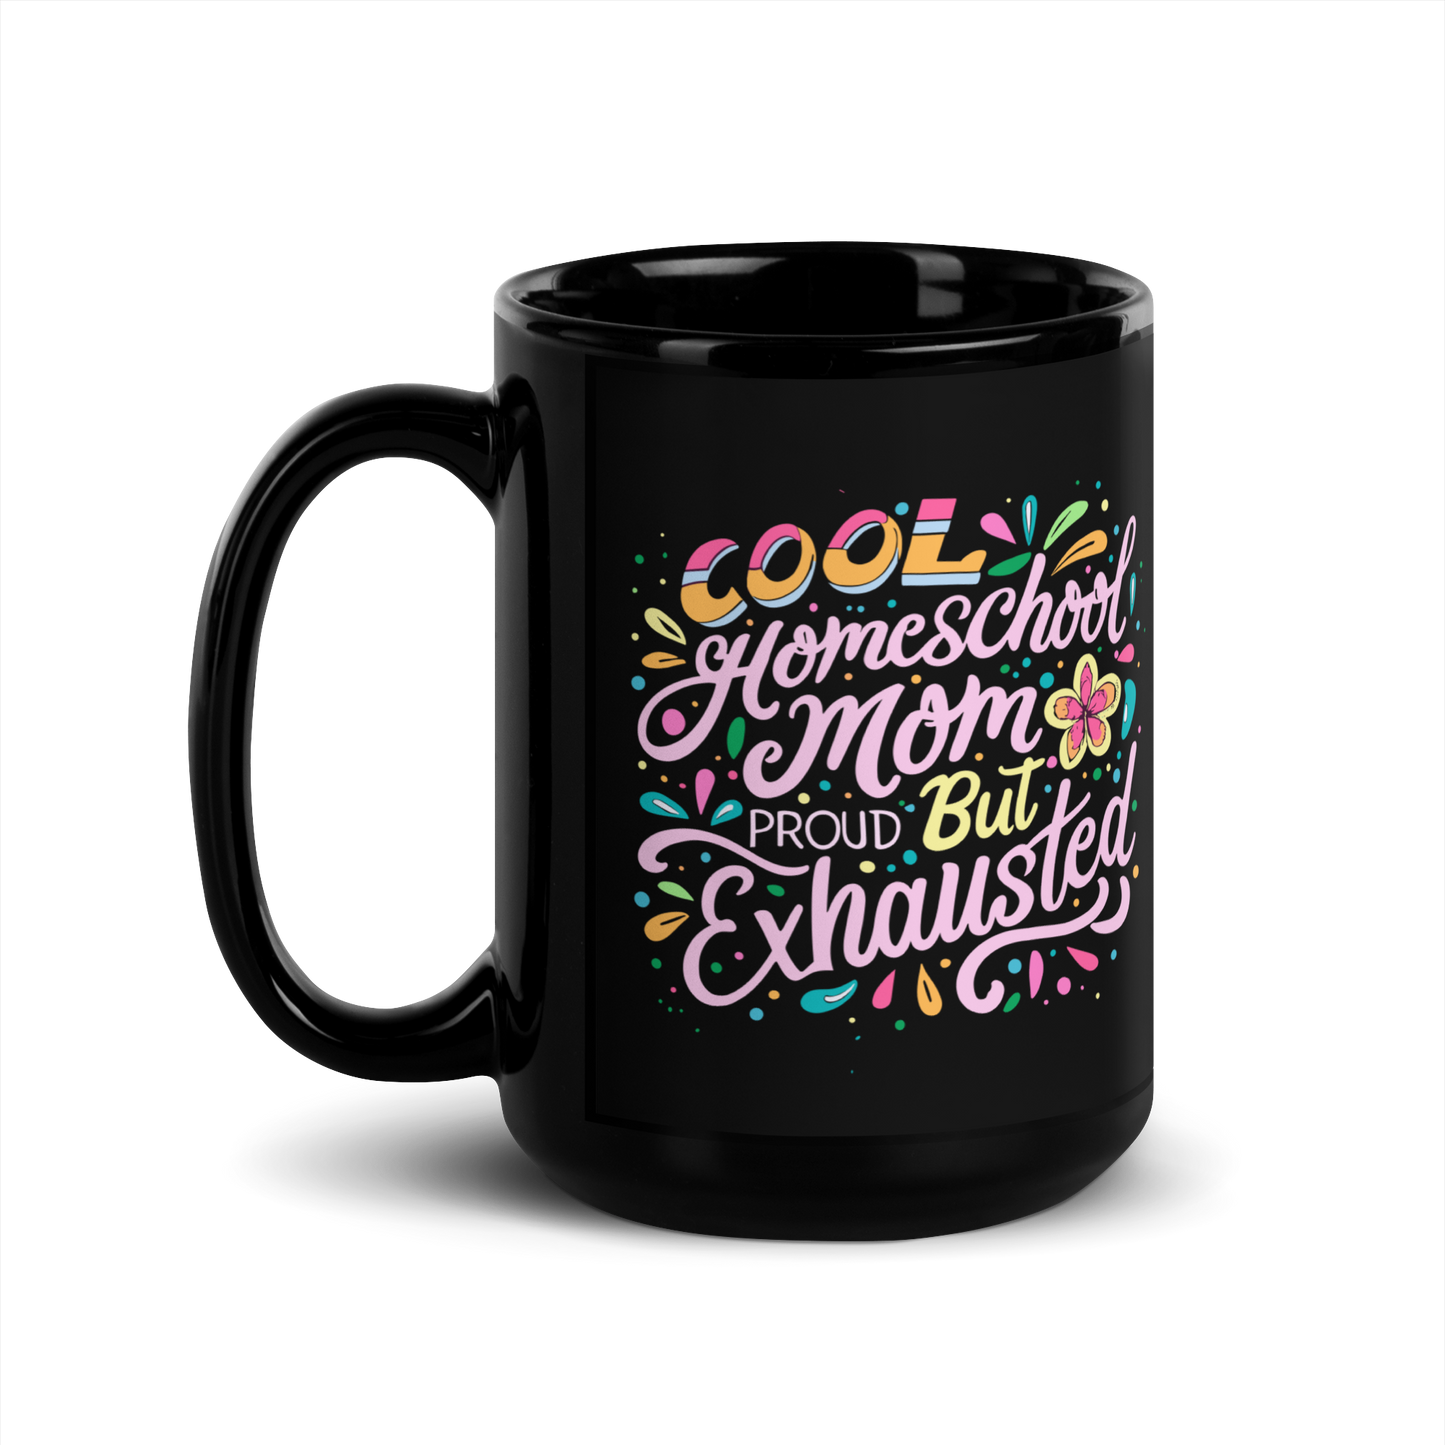 Homeschool Mom Coffee Mug - "Cool Homeschool Mom: Proud But Exhausted"